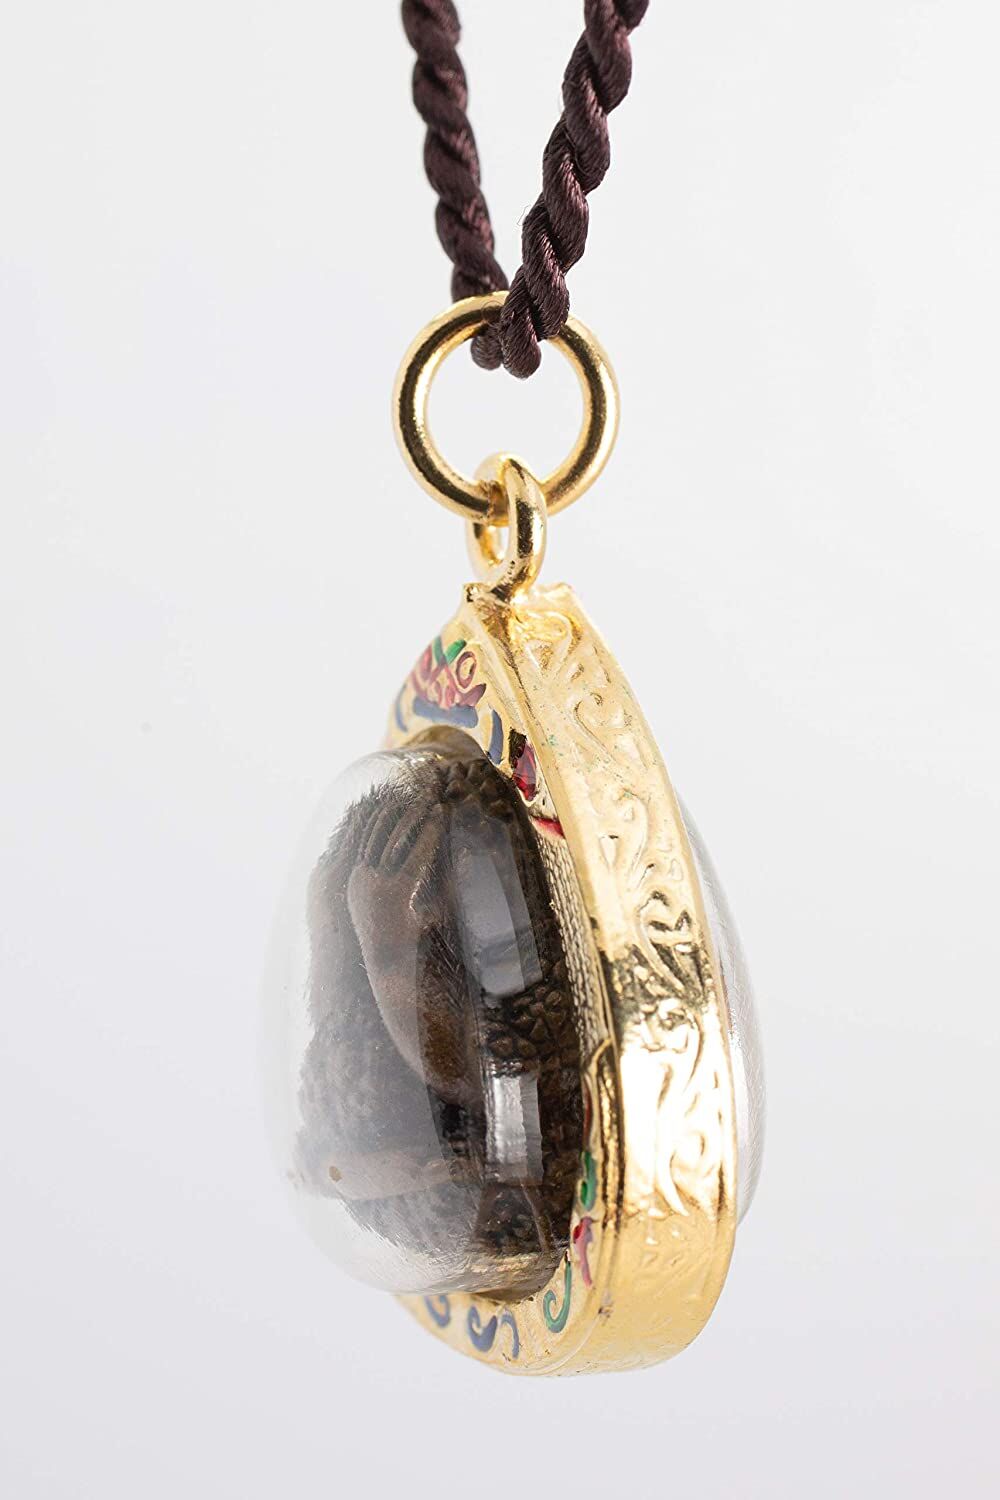 Artschatz - The Weeping Buddha Golden Amulet Thai Buddha Amulet Pendant